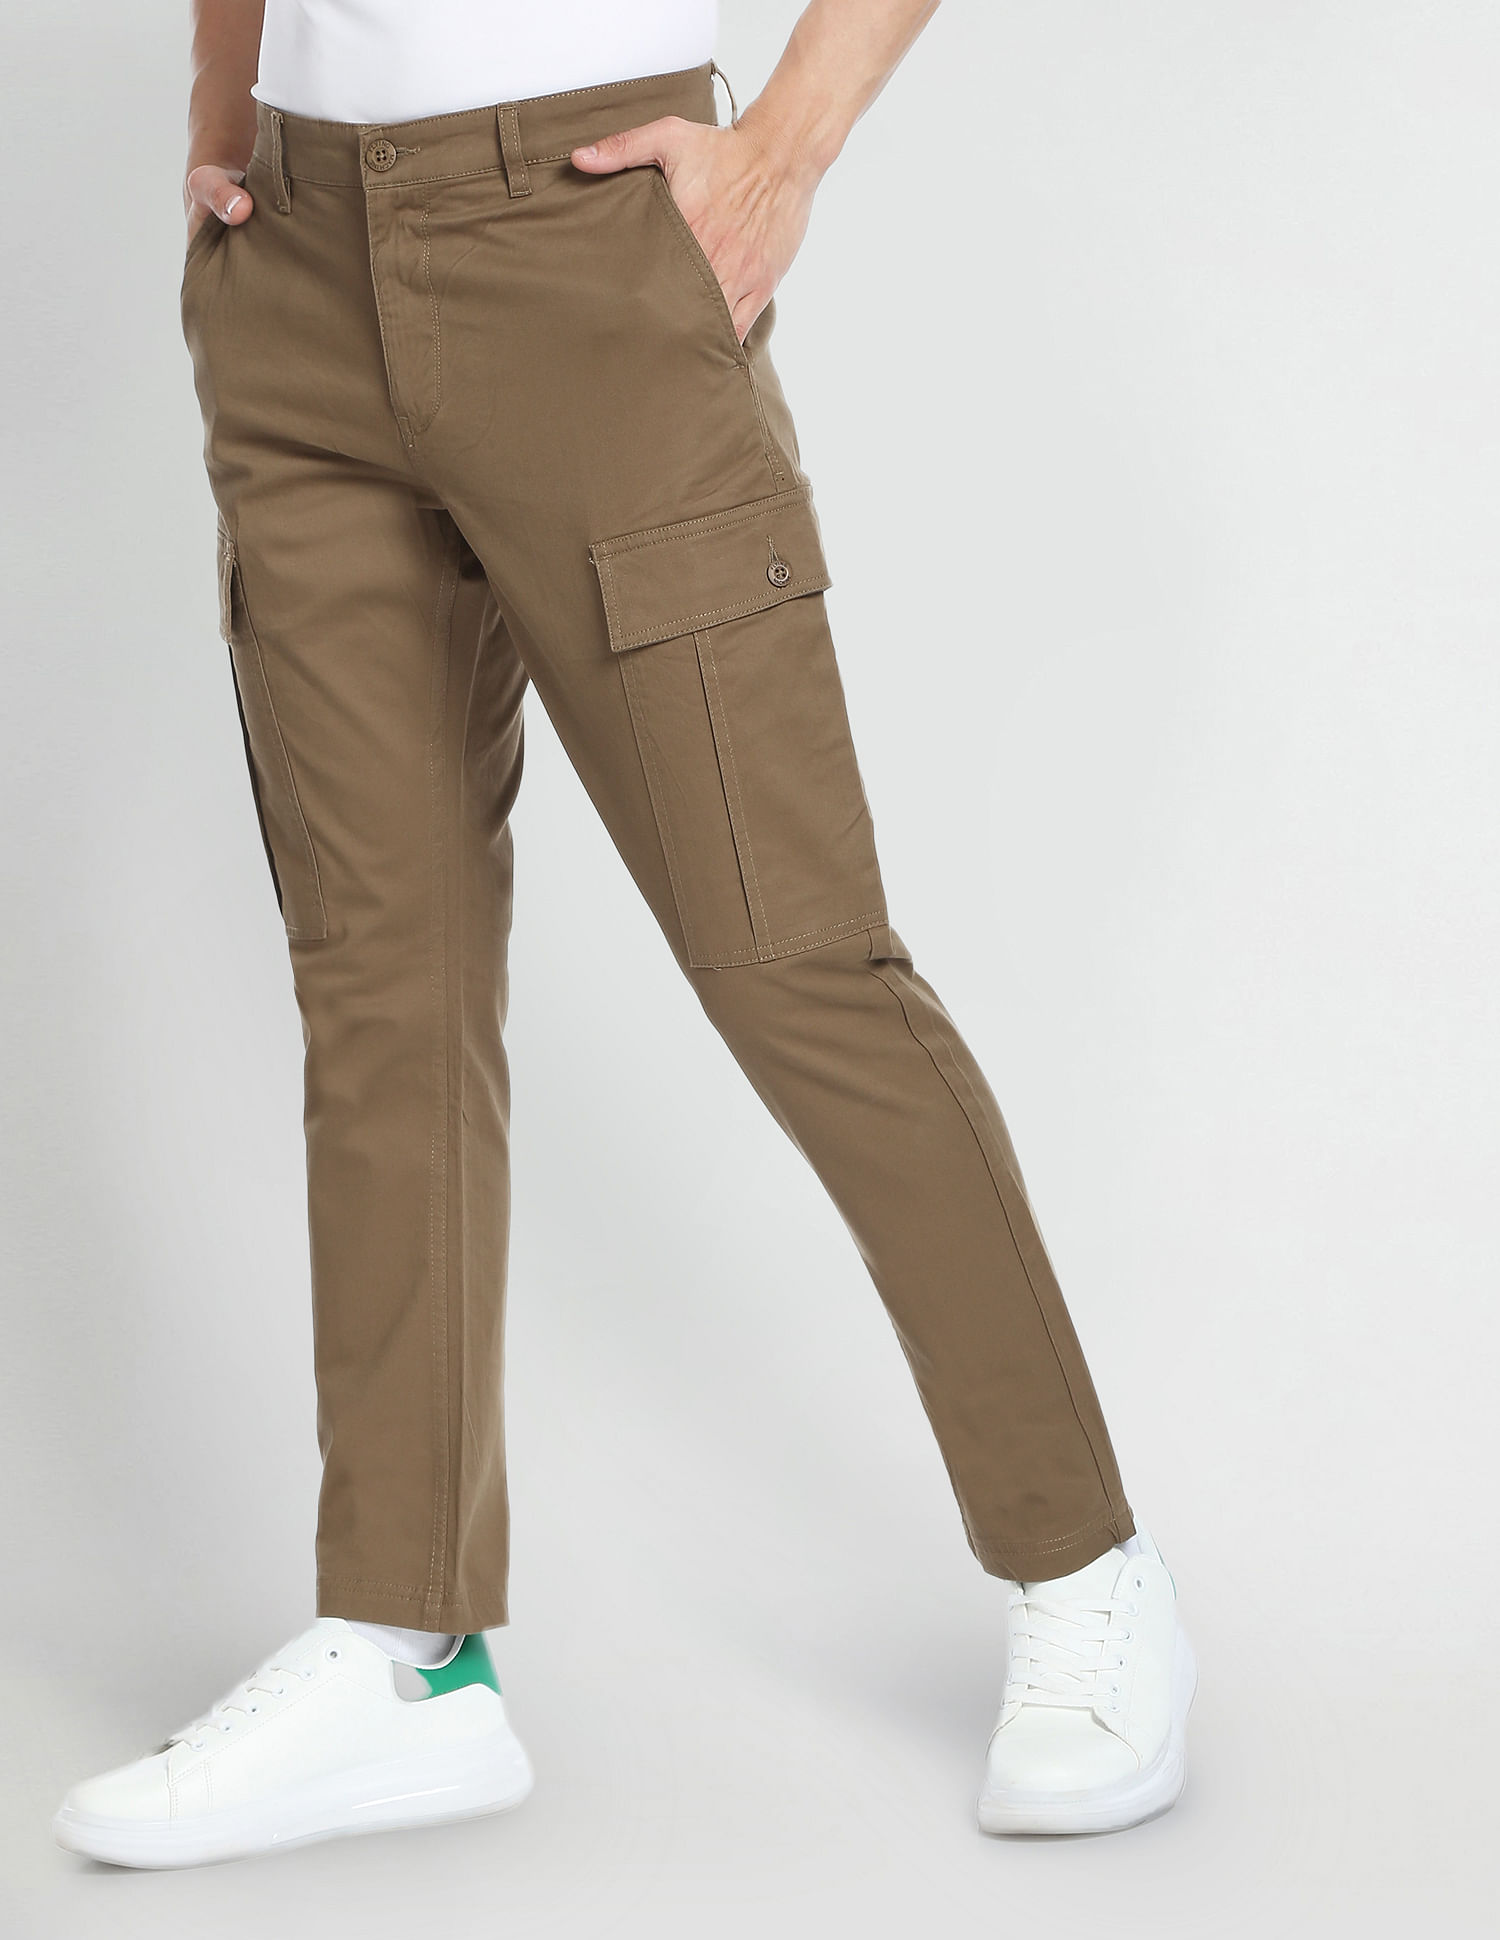 Buy Plus Size Cargo Pants & Cargo Pants For Men - Apella